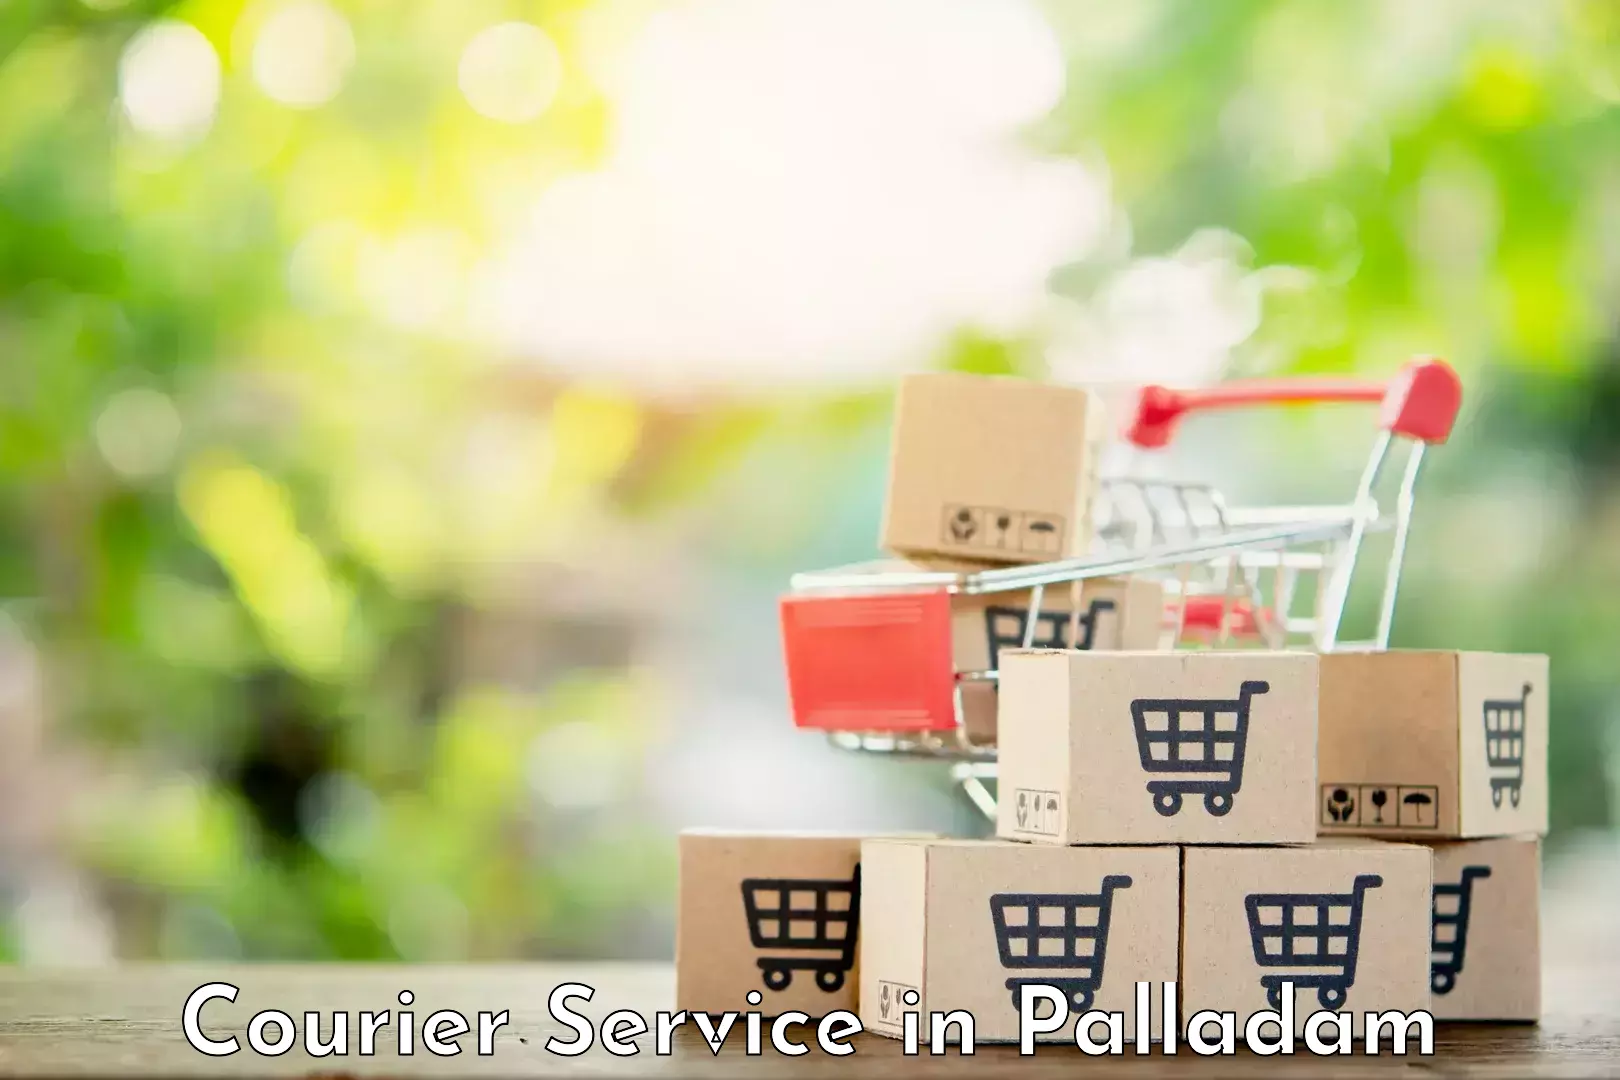 Parcel service for businesses in Palladam